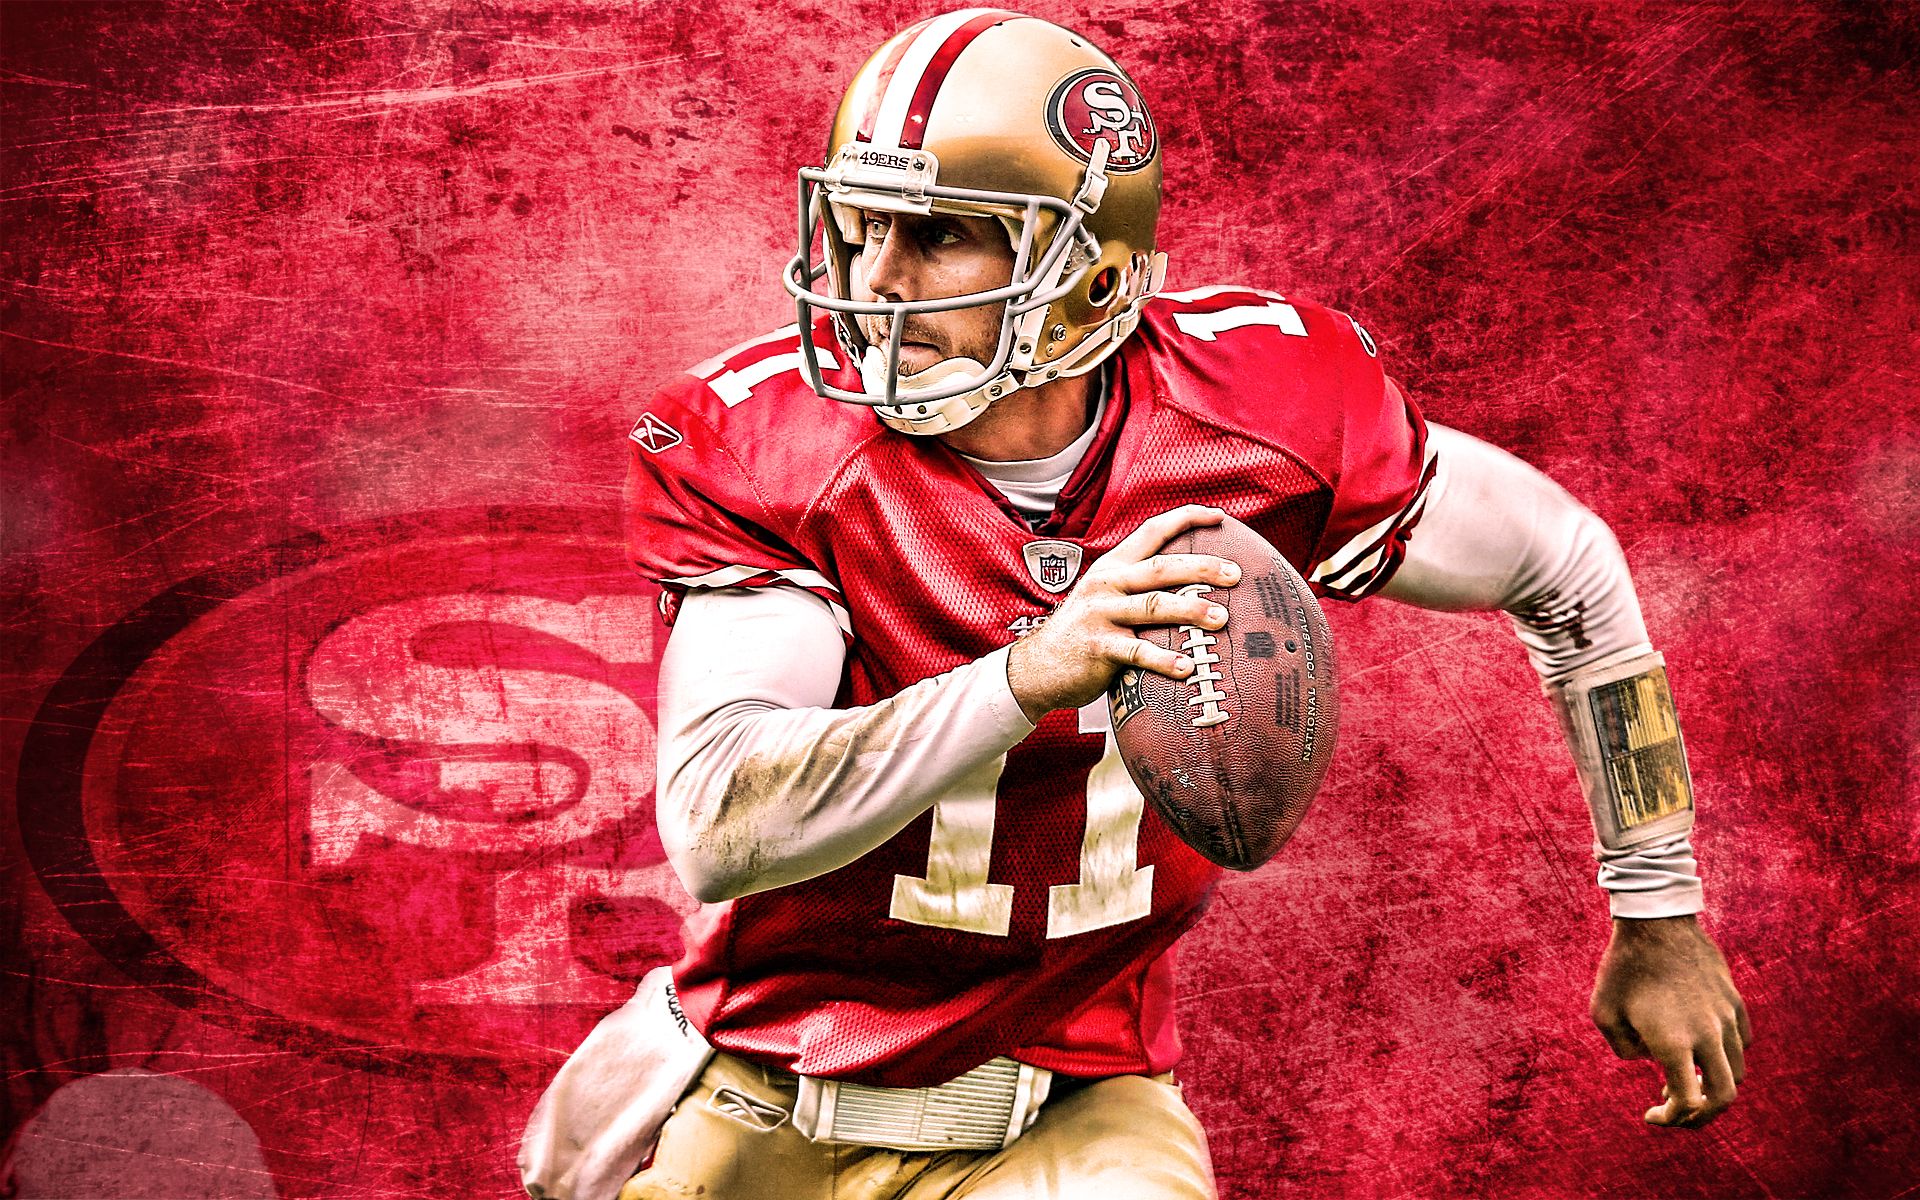 NFL Football Player San Francisco 49ers wallpaper HD. Free desktop ...